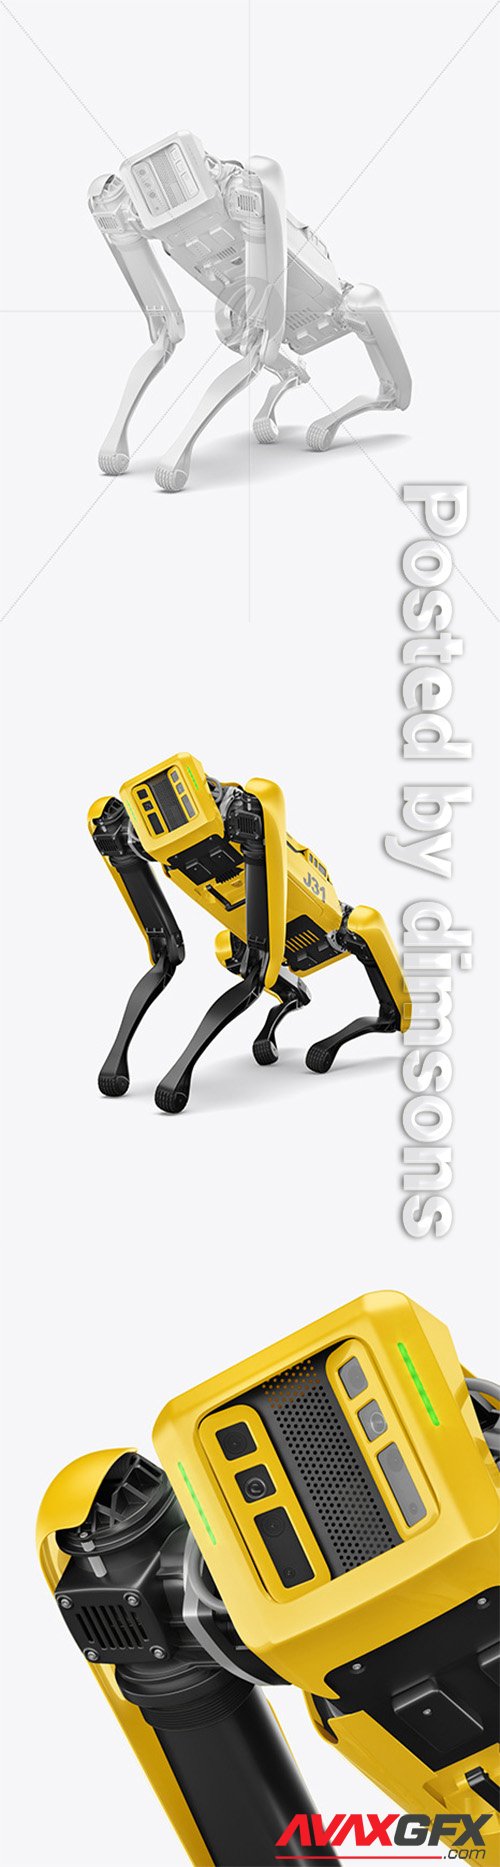 Four-Legged Robot Mockup 66209